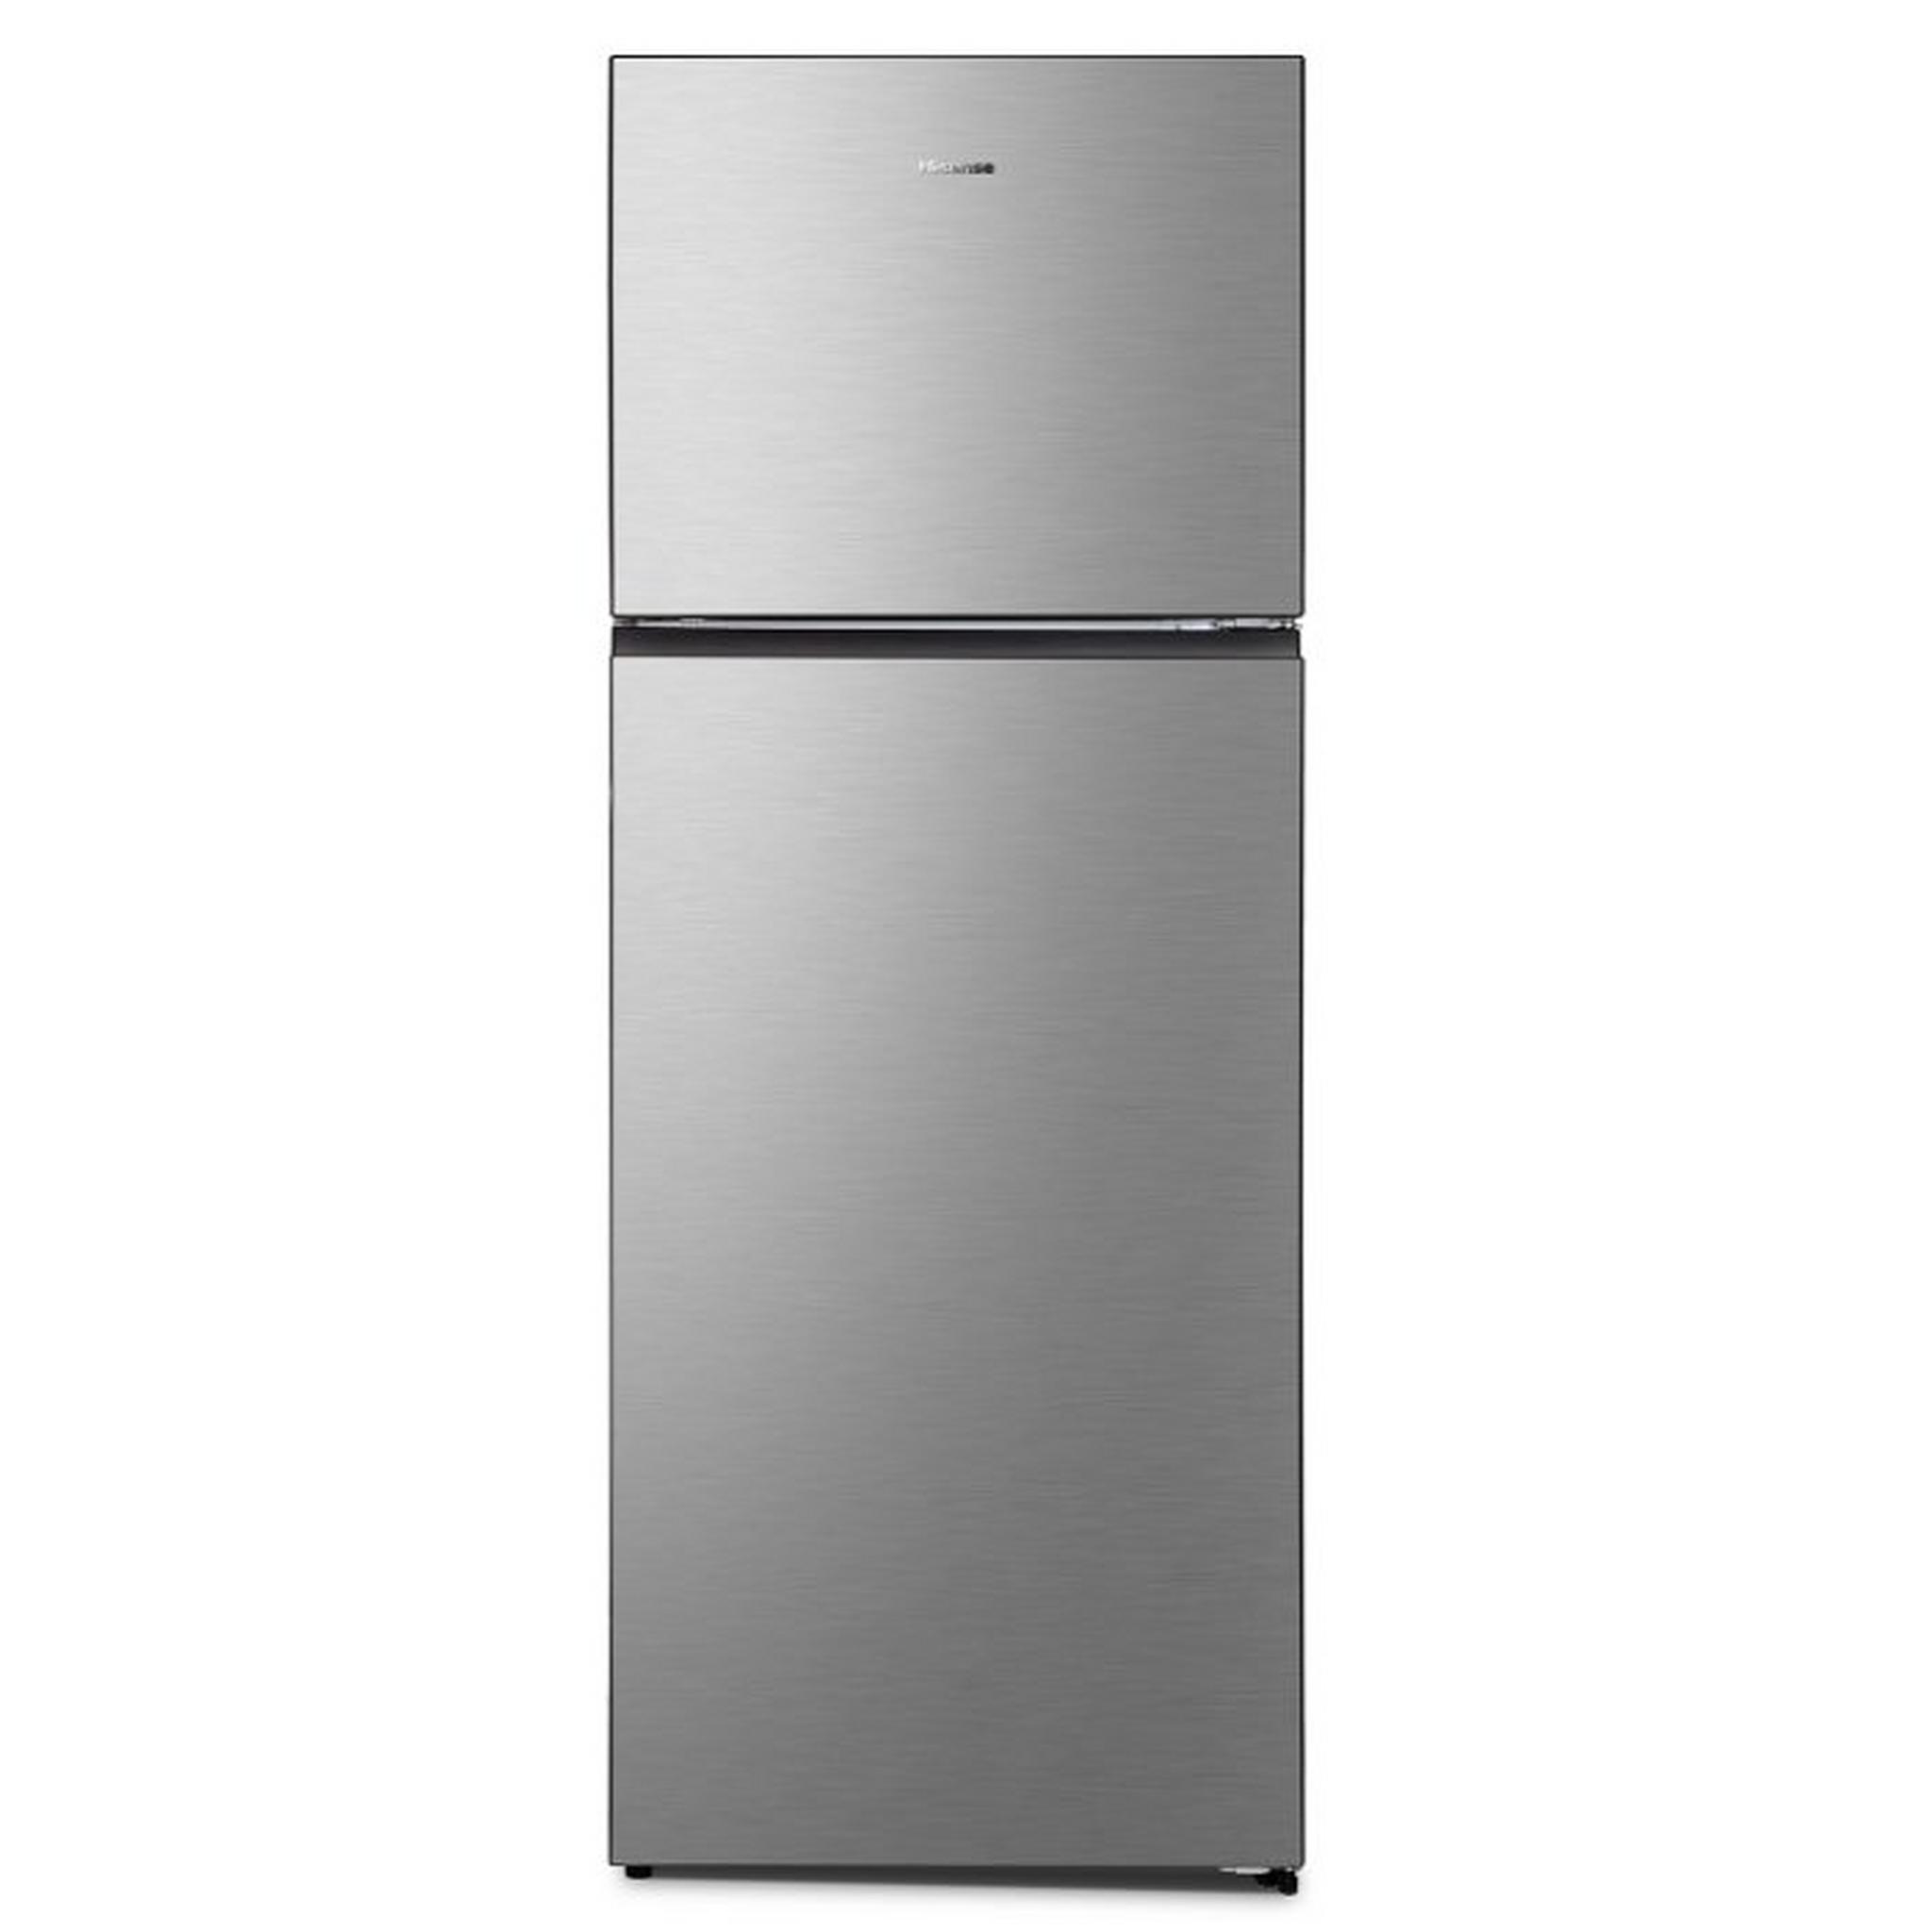 Hisense Top Freezer Refrigerator, 21 CFT, 599 Liters, RT599N4ASU - Inox